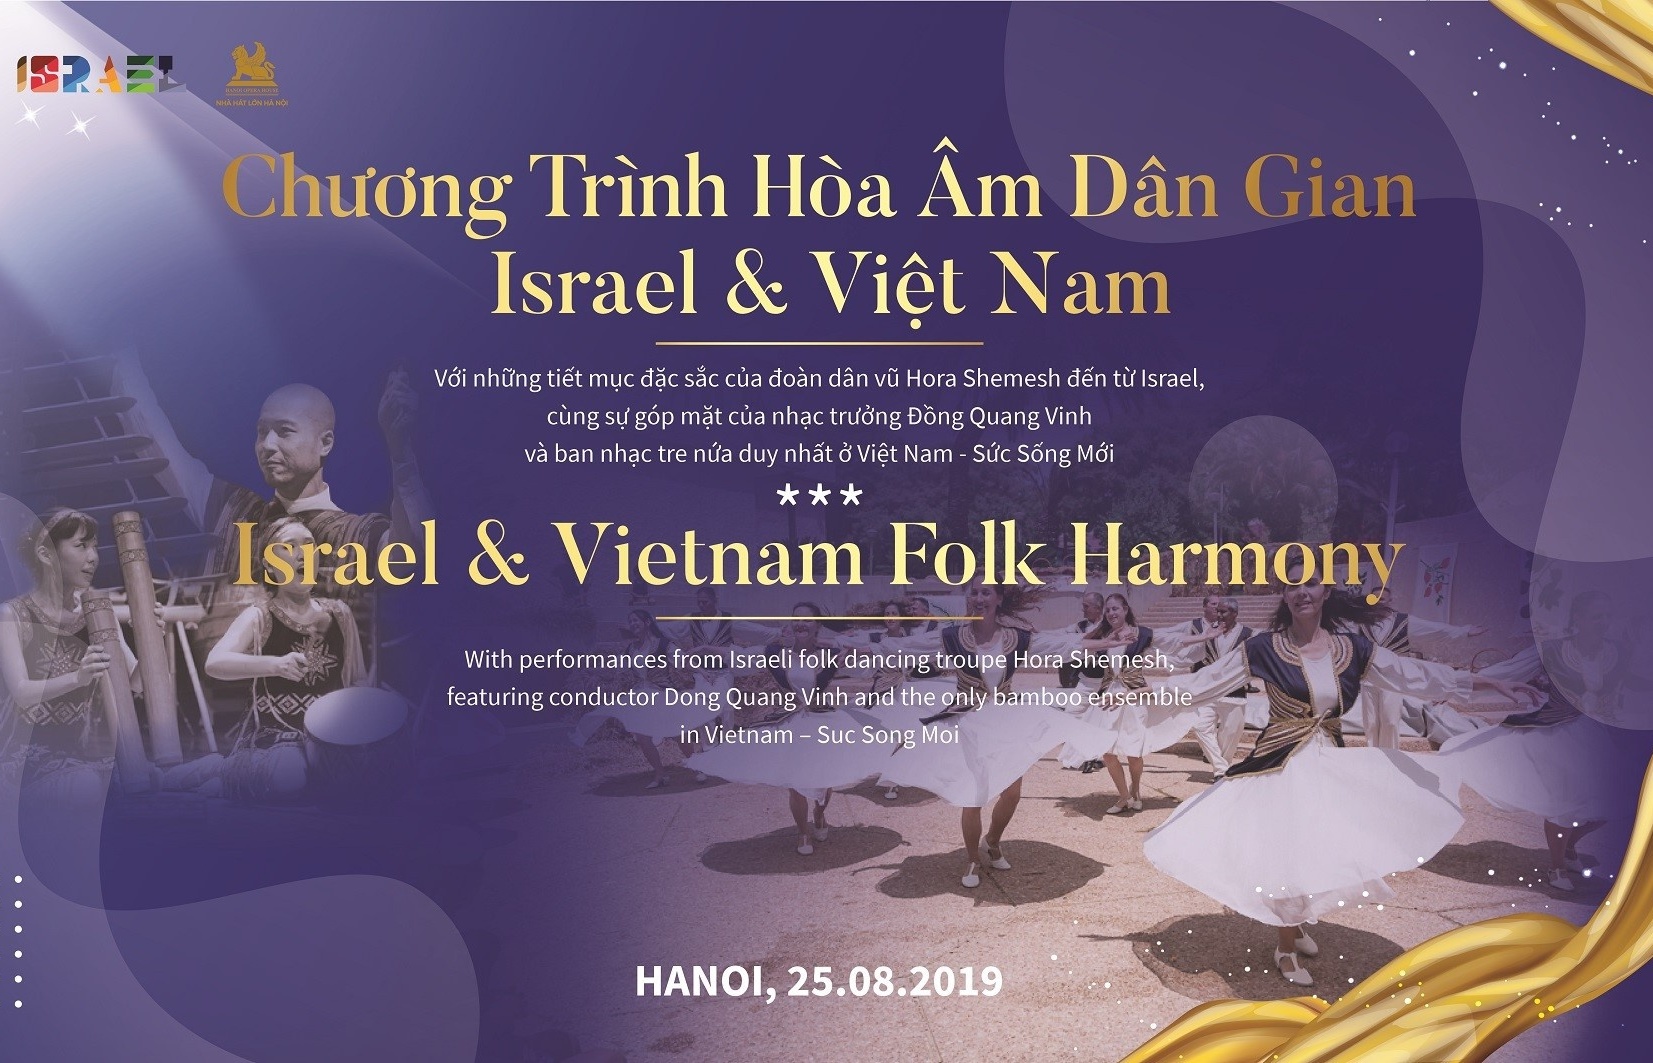 Israel & Vietnam Folk Harmony program